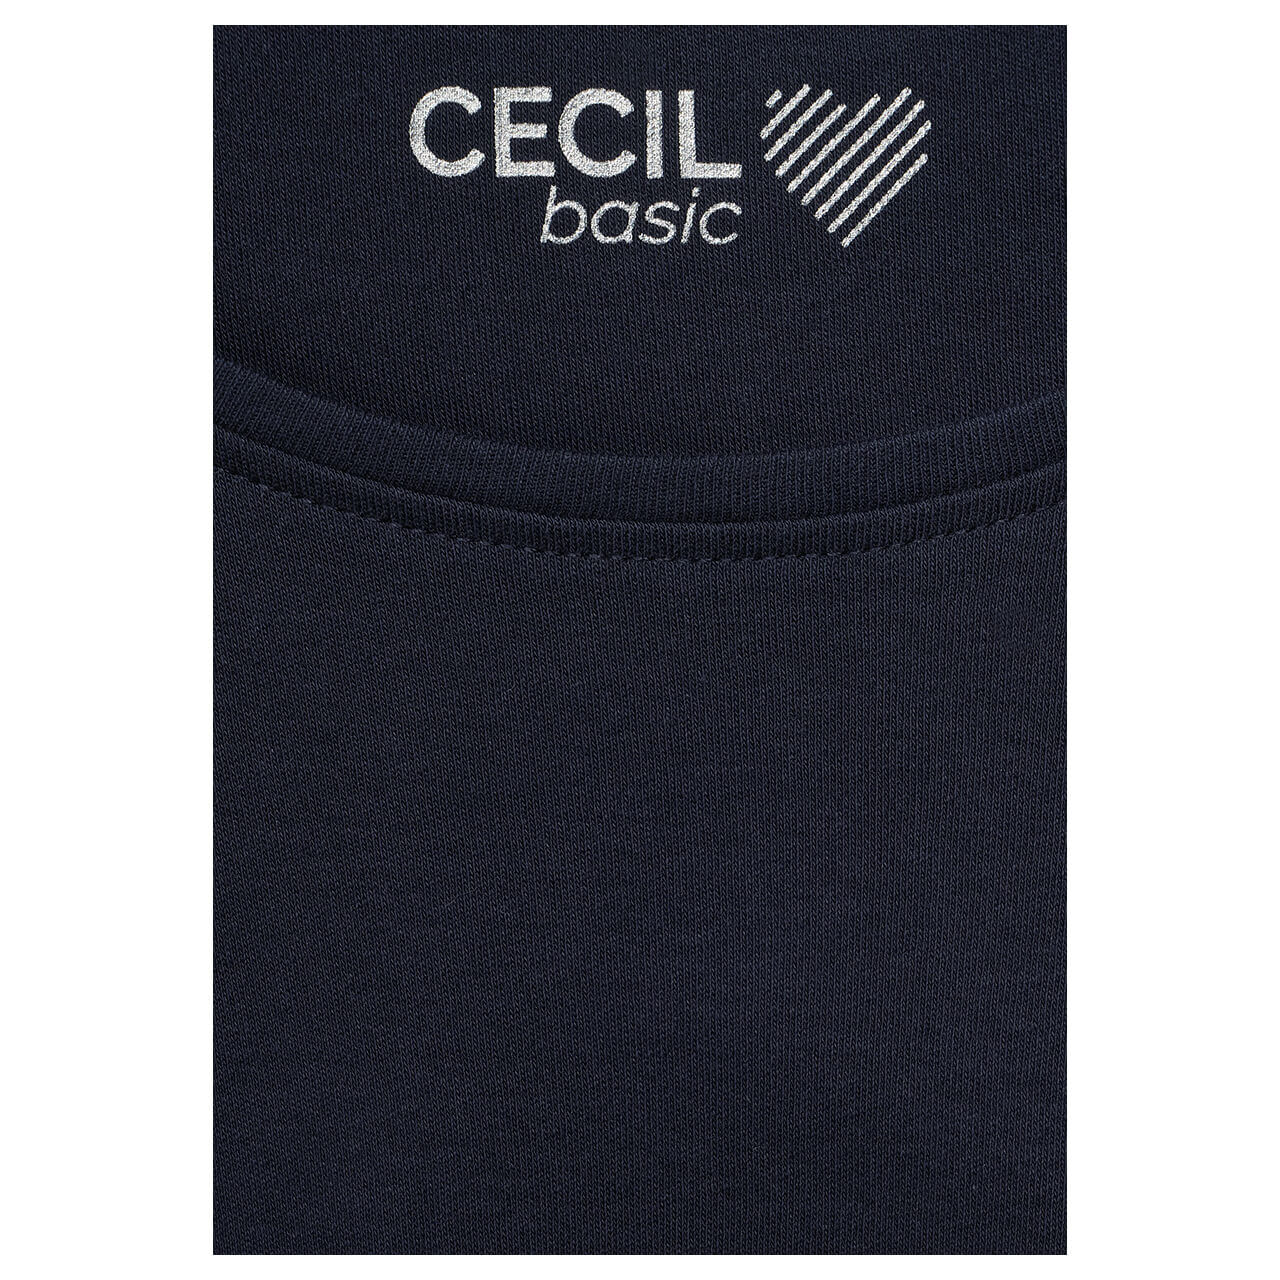 Cecil Pia Damen Shirt in Blau kaufen | 14077